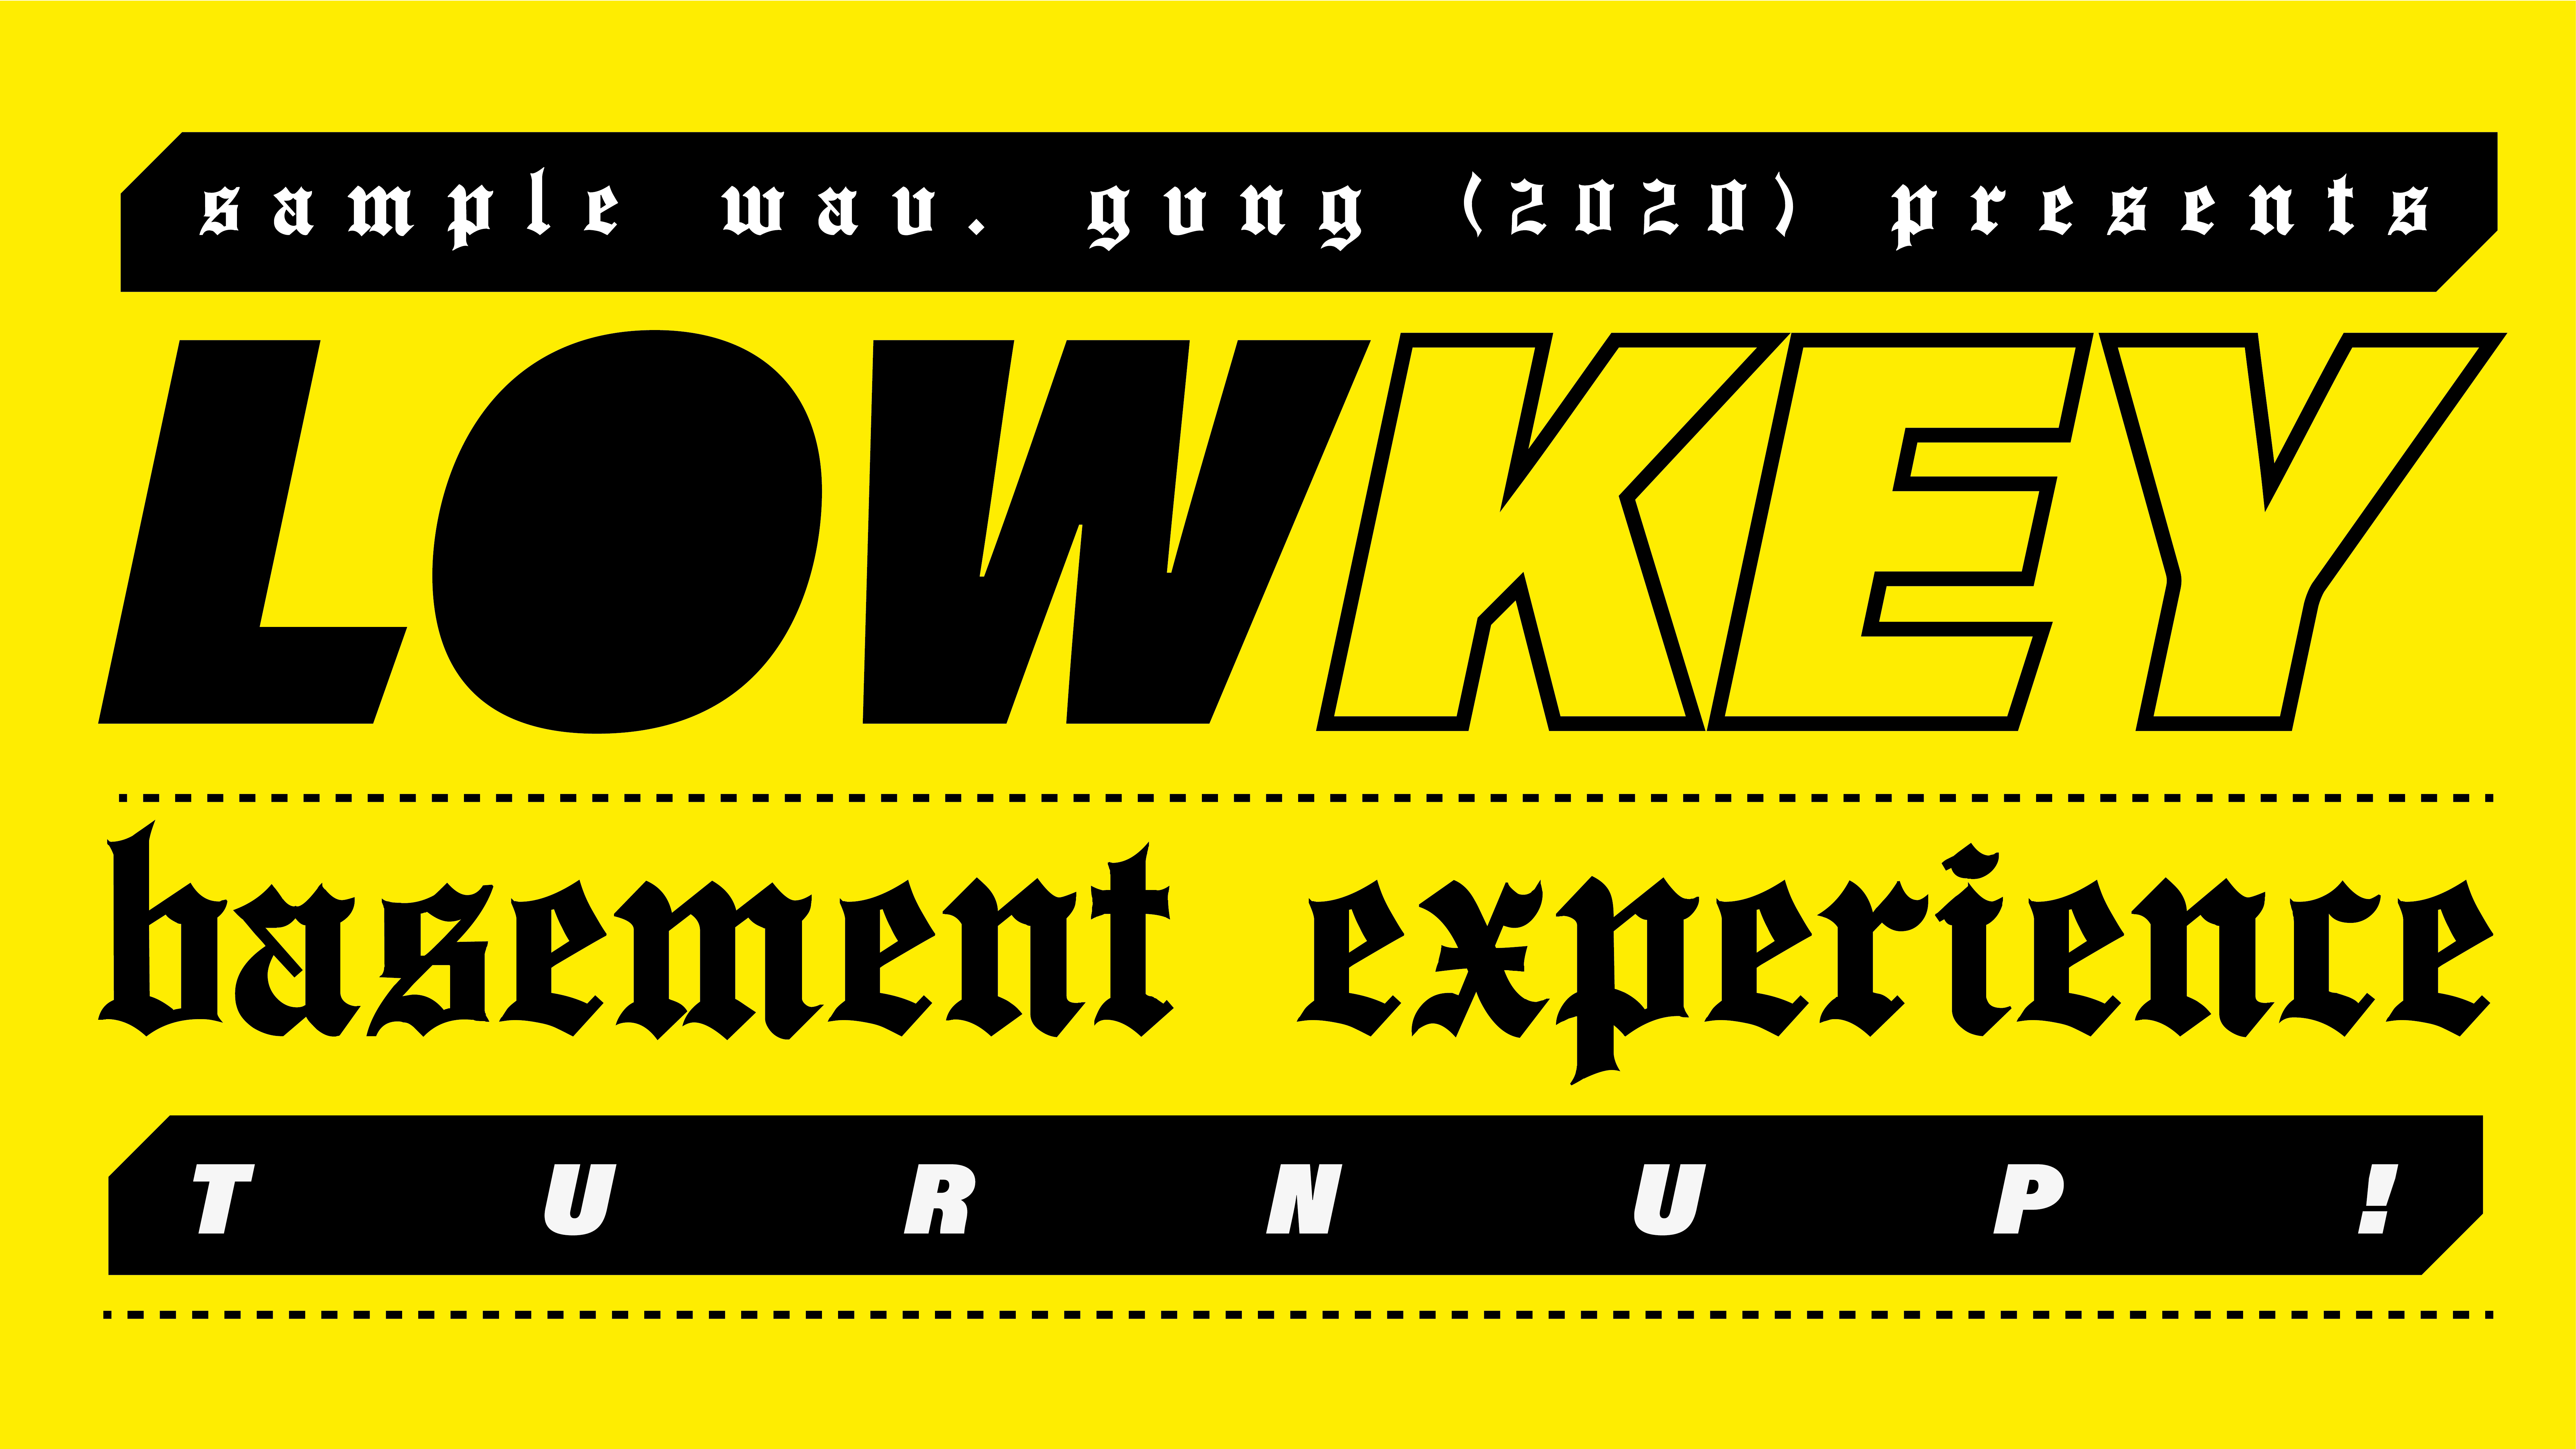 Lowkey Basement Experience